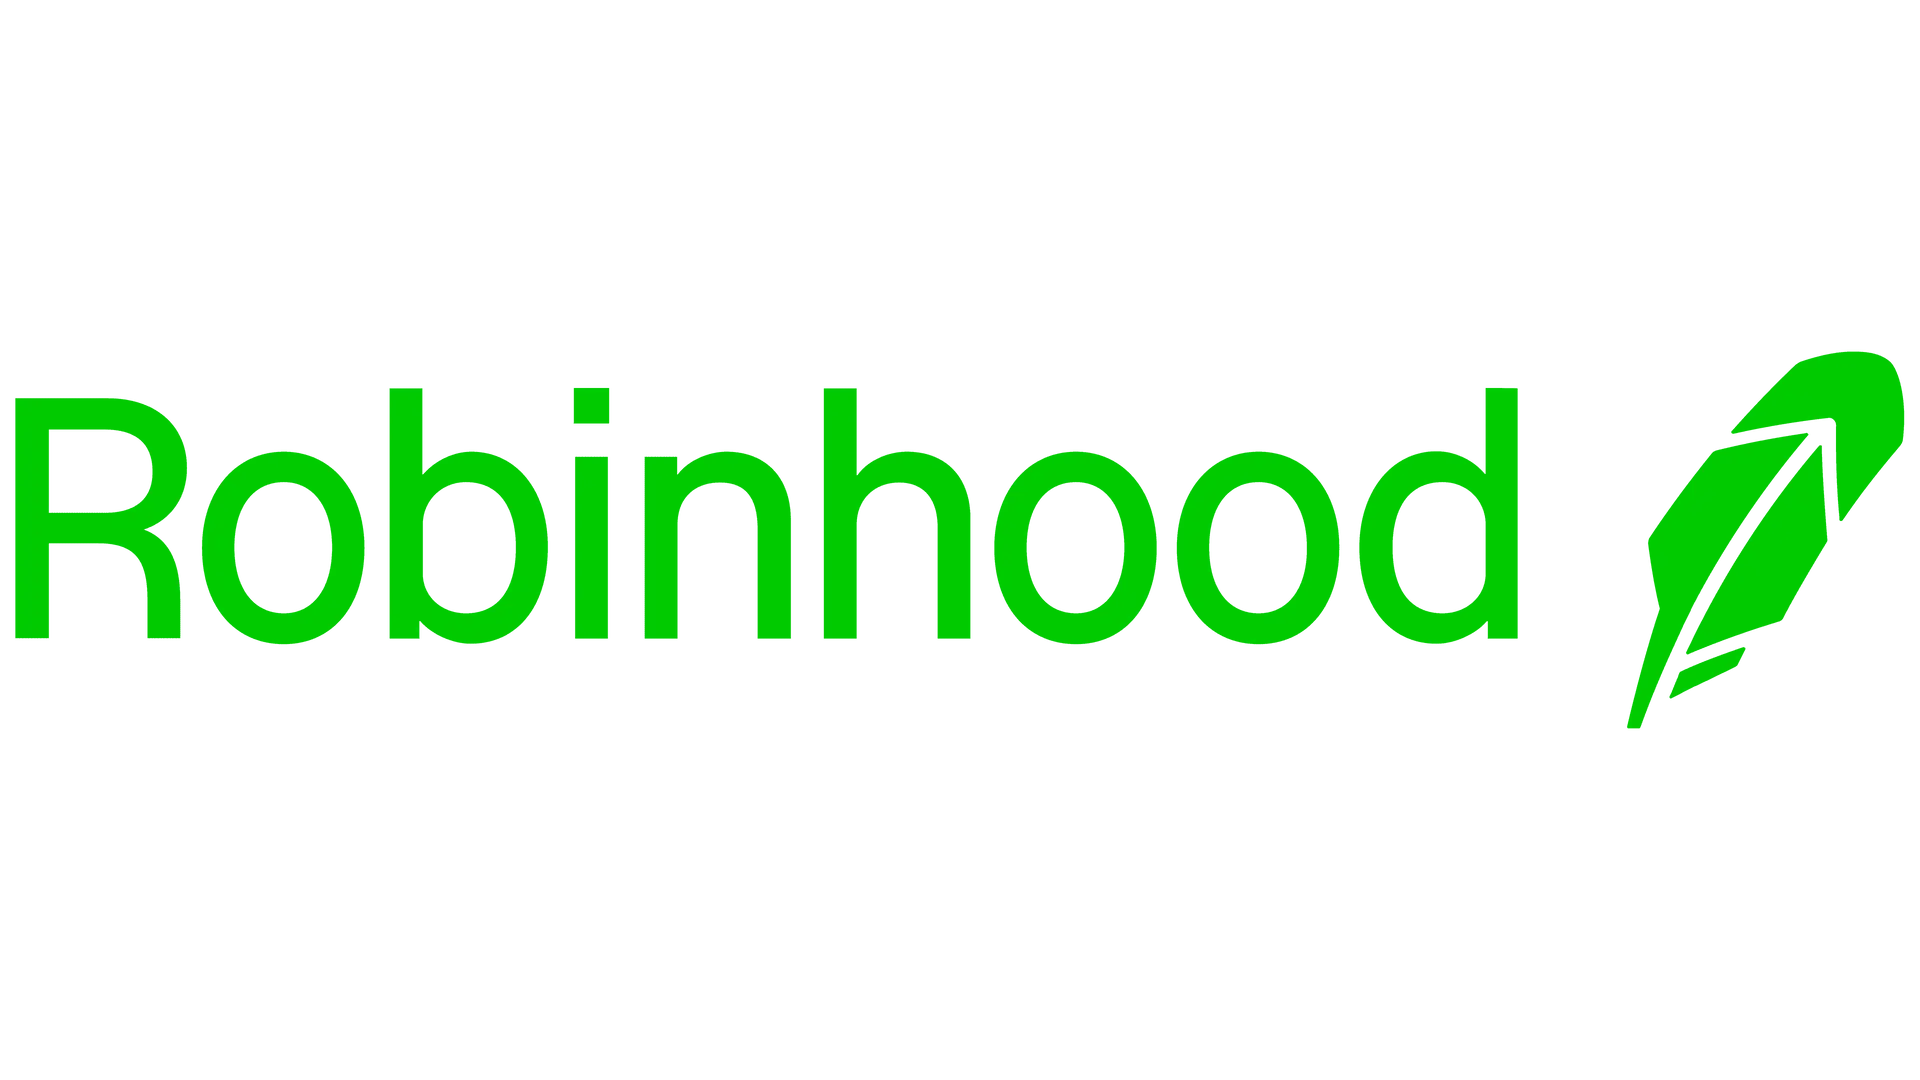 Robinhood Data Scientist Interview Guide